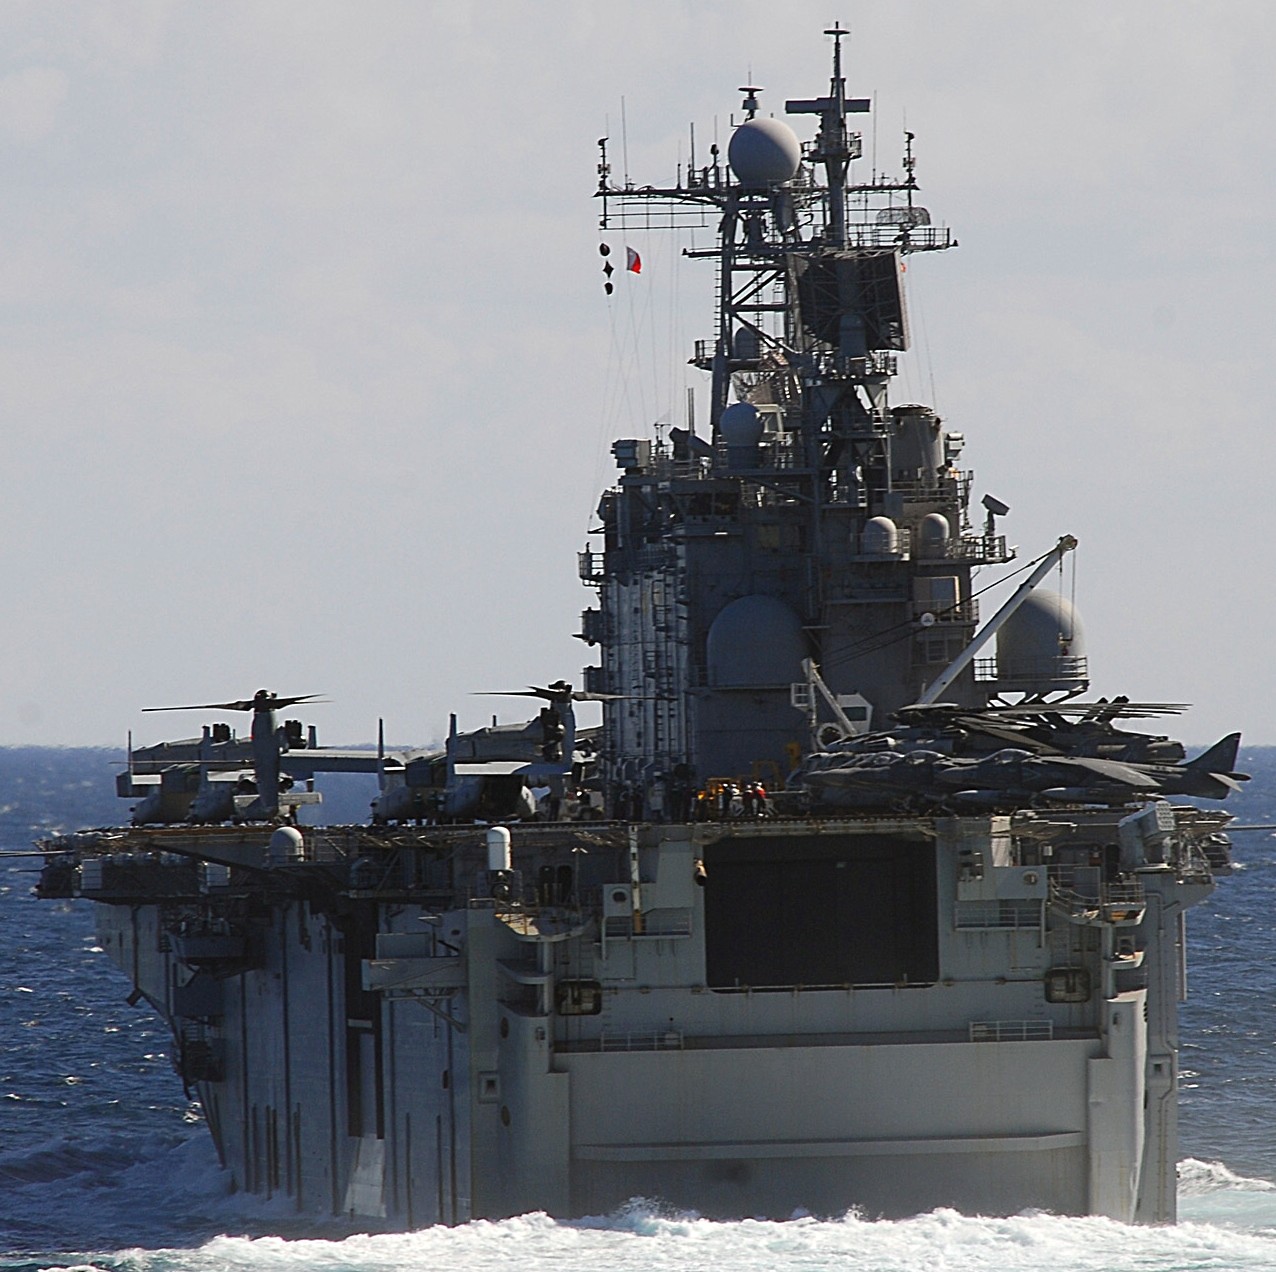 lha-4 uss nassau tarawa class amphibious assault ship us navy 55